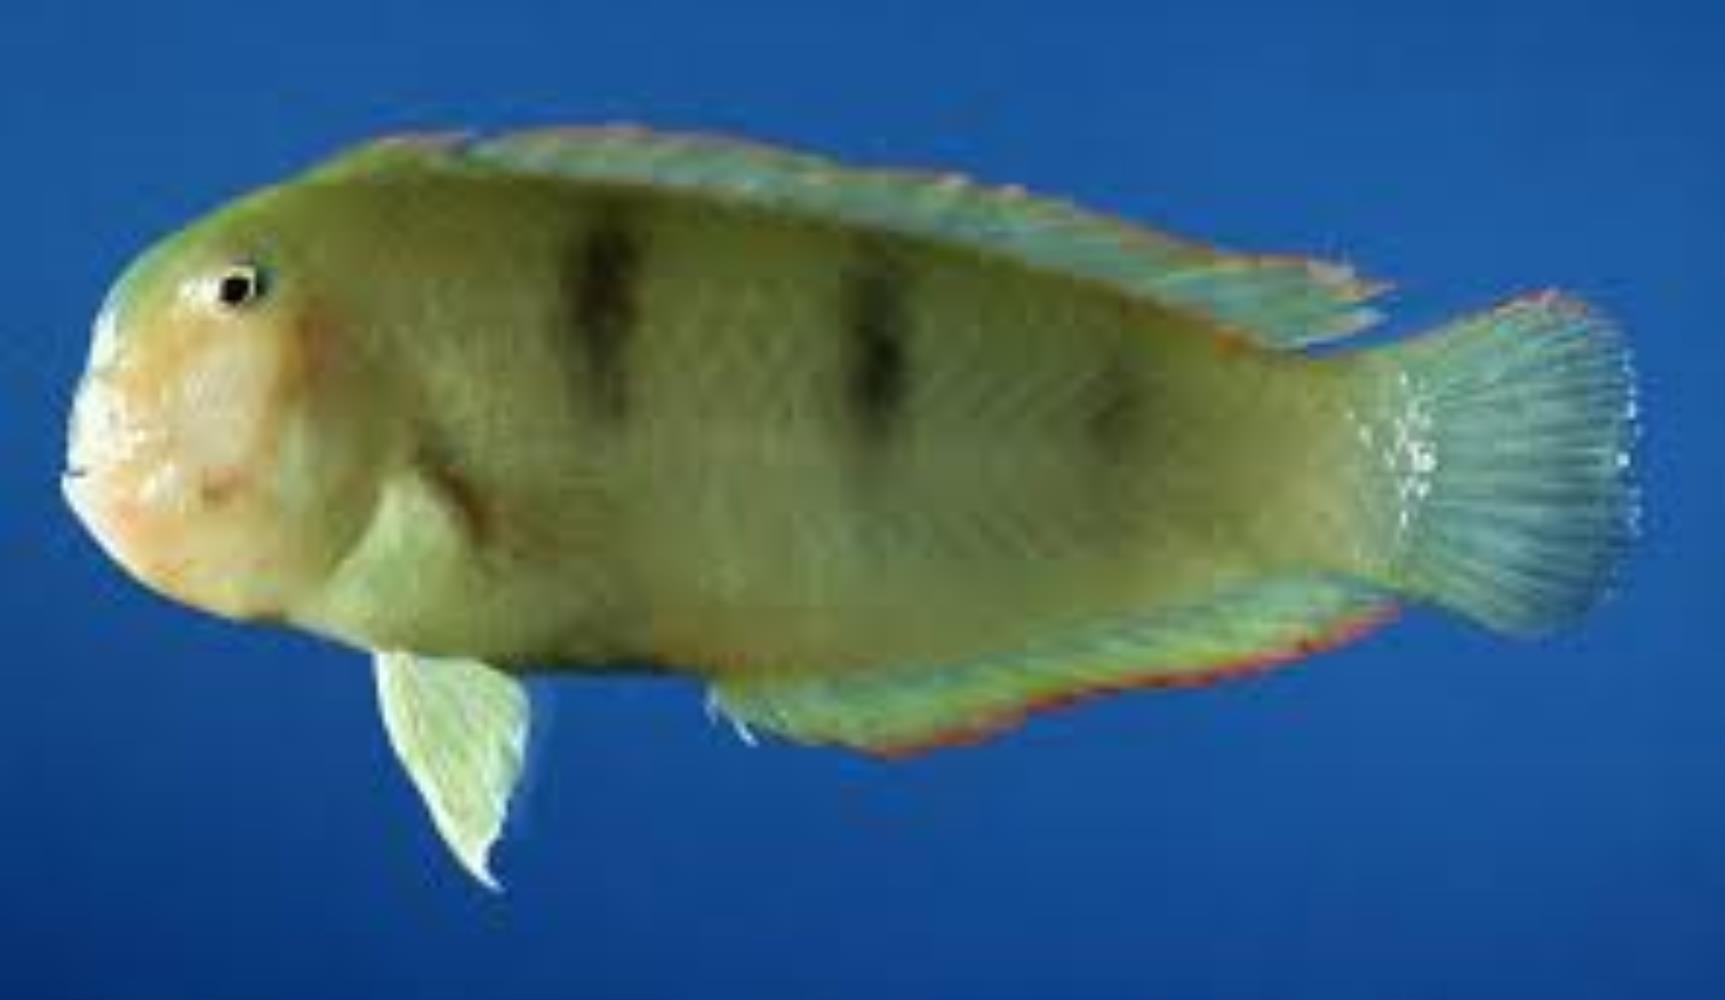 Three-banded Razorfish